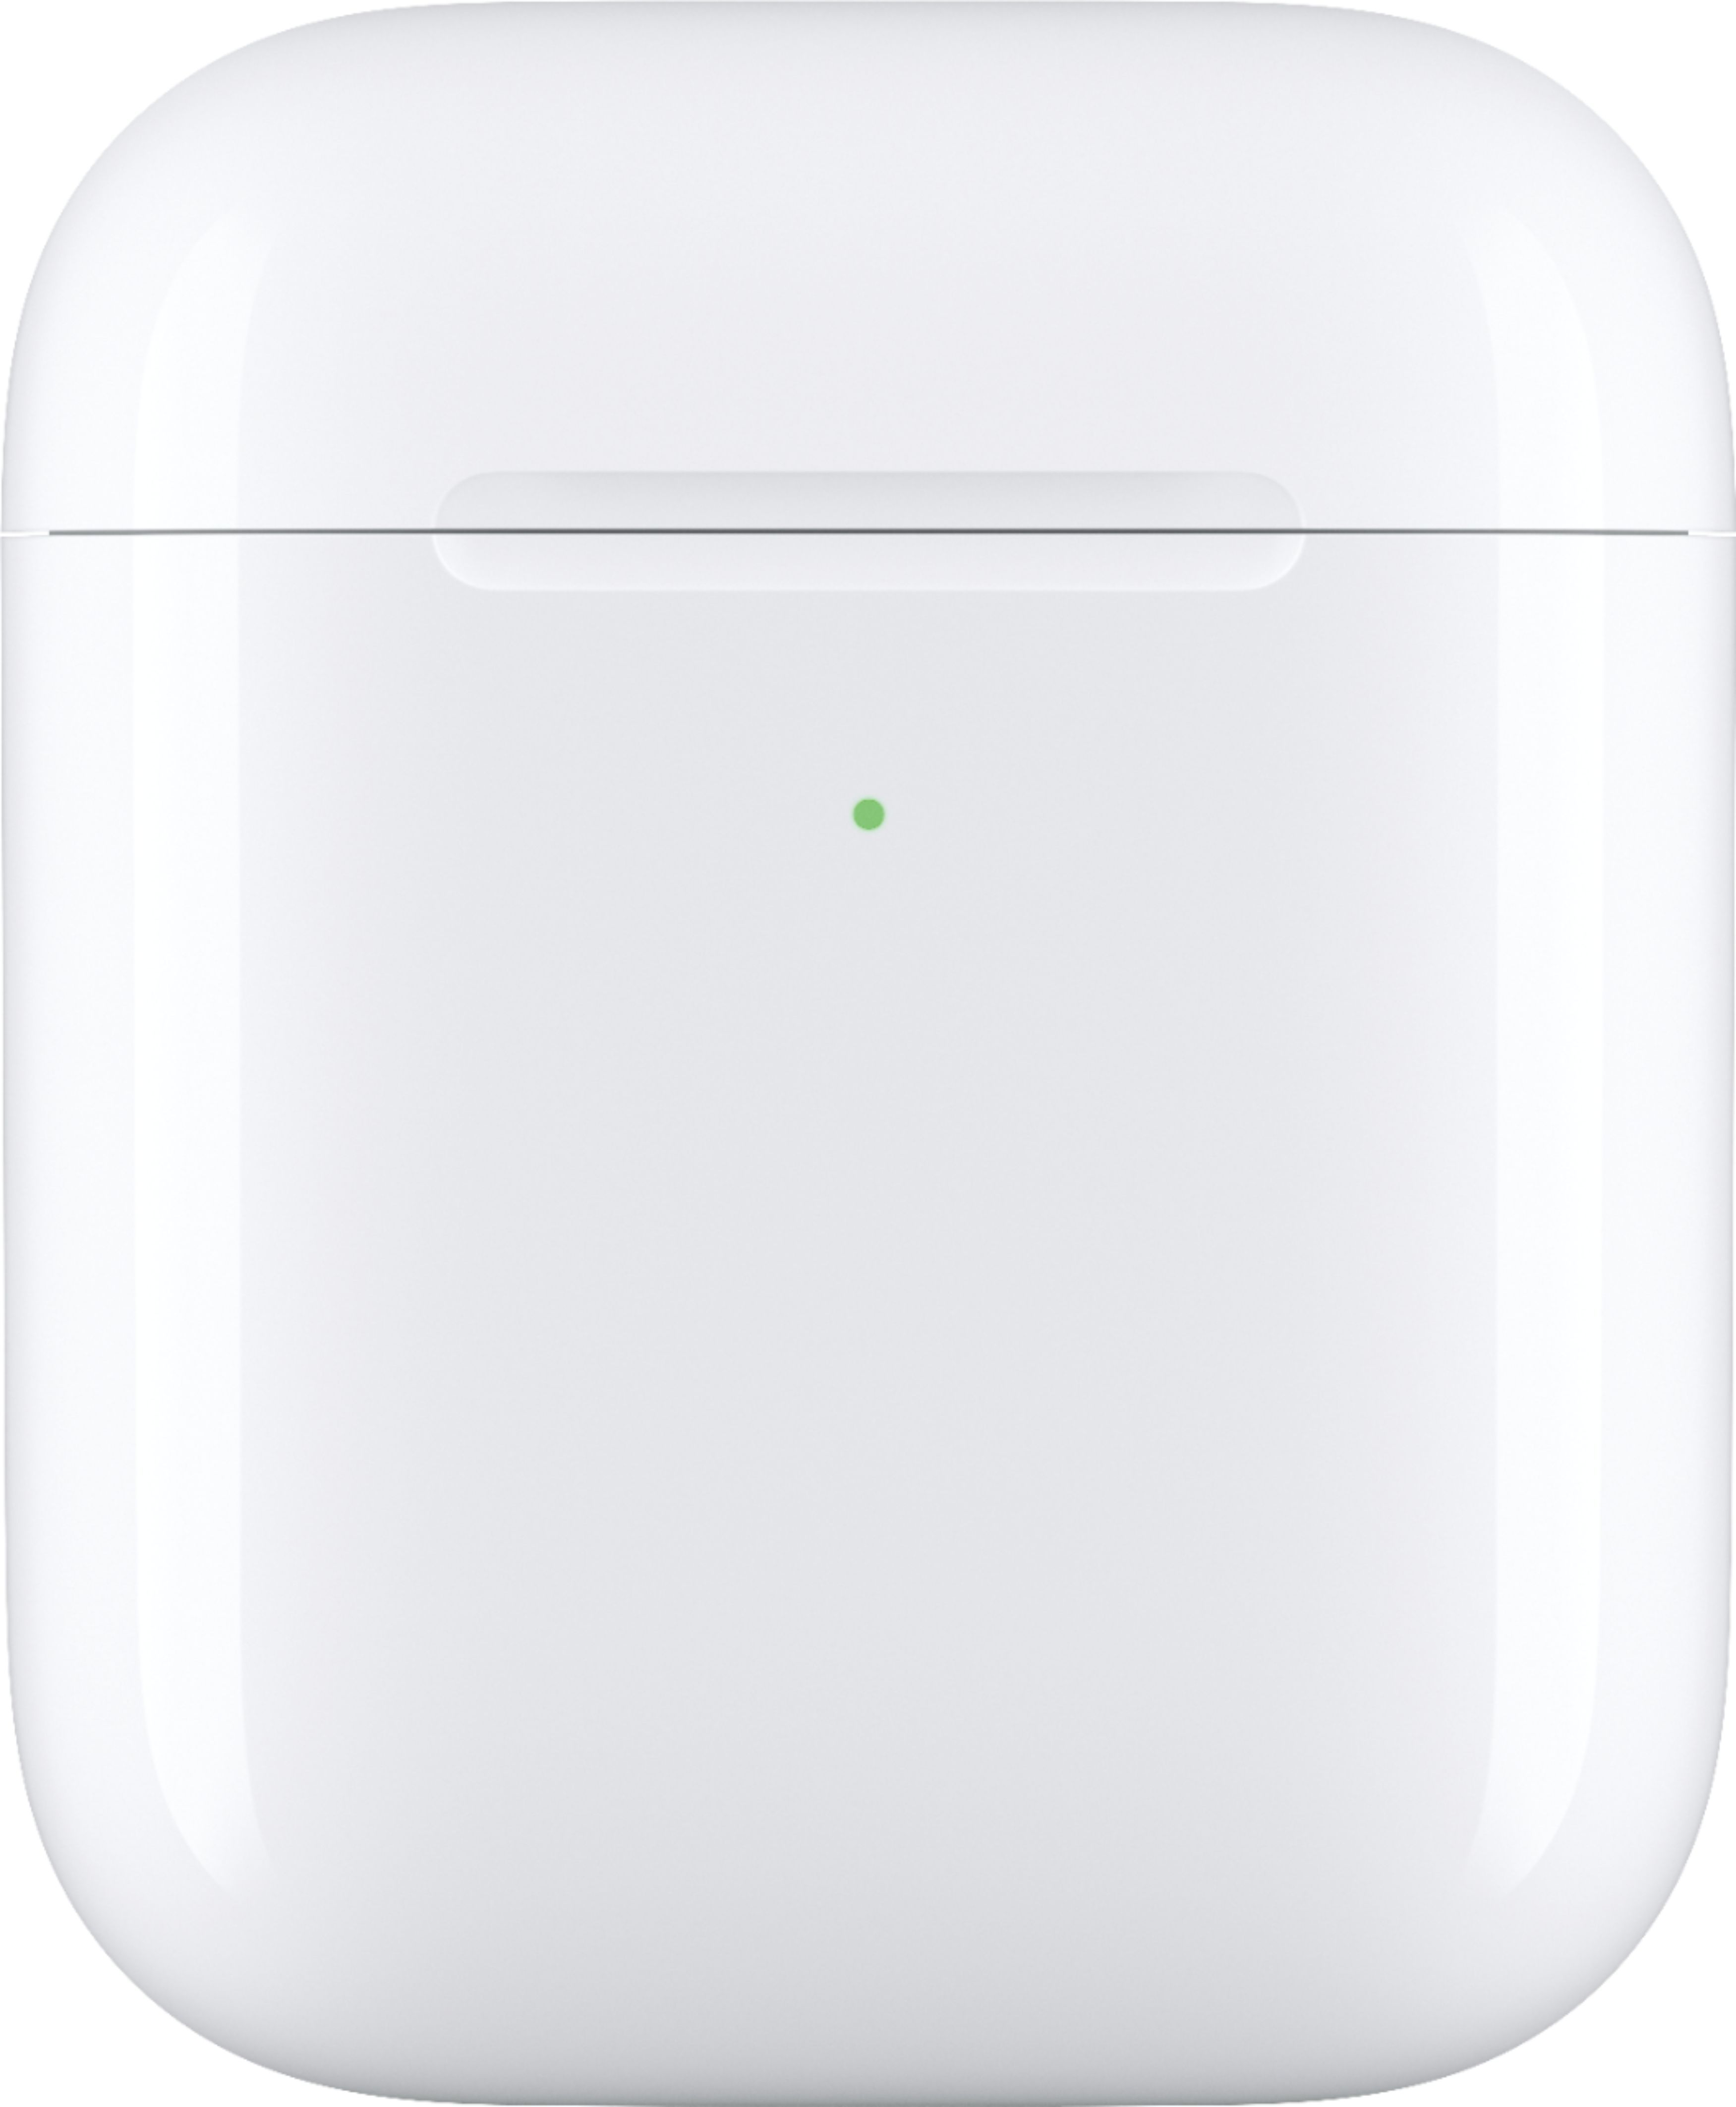 Apple AirPods Wireless Charging Case White MR8U2AM/A - Best Buy | Best Buy U.S.